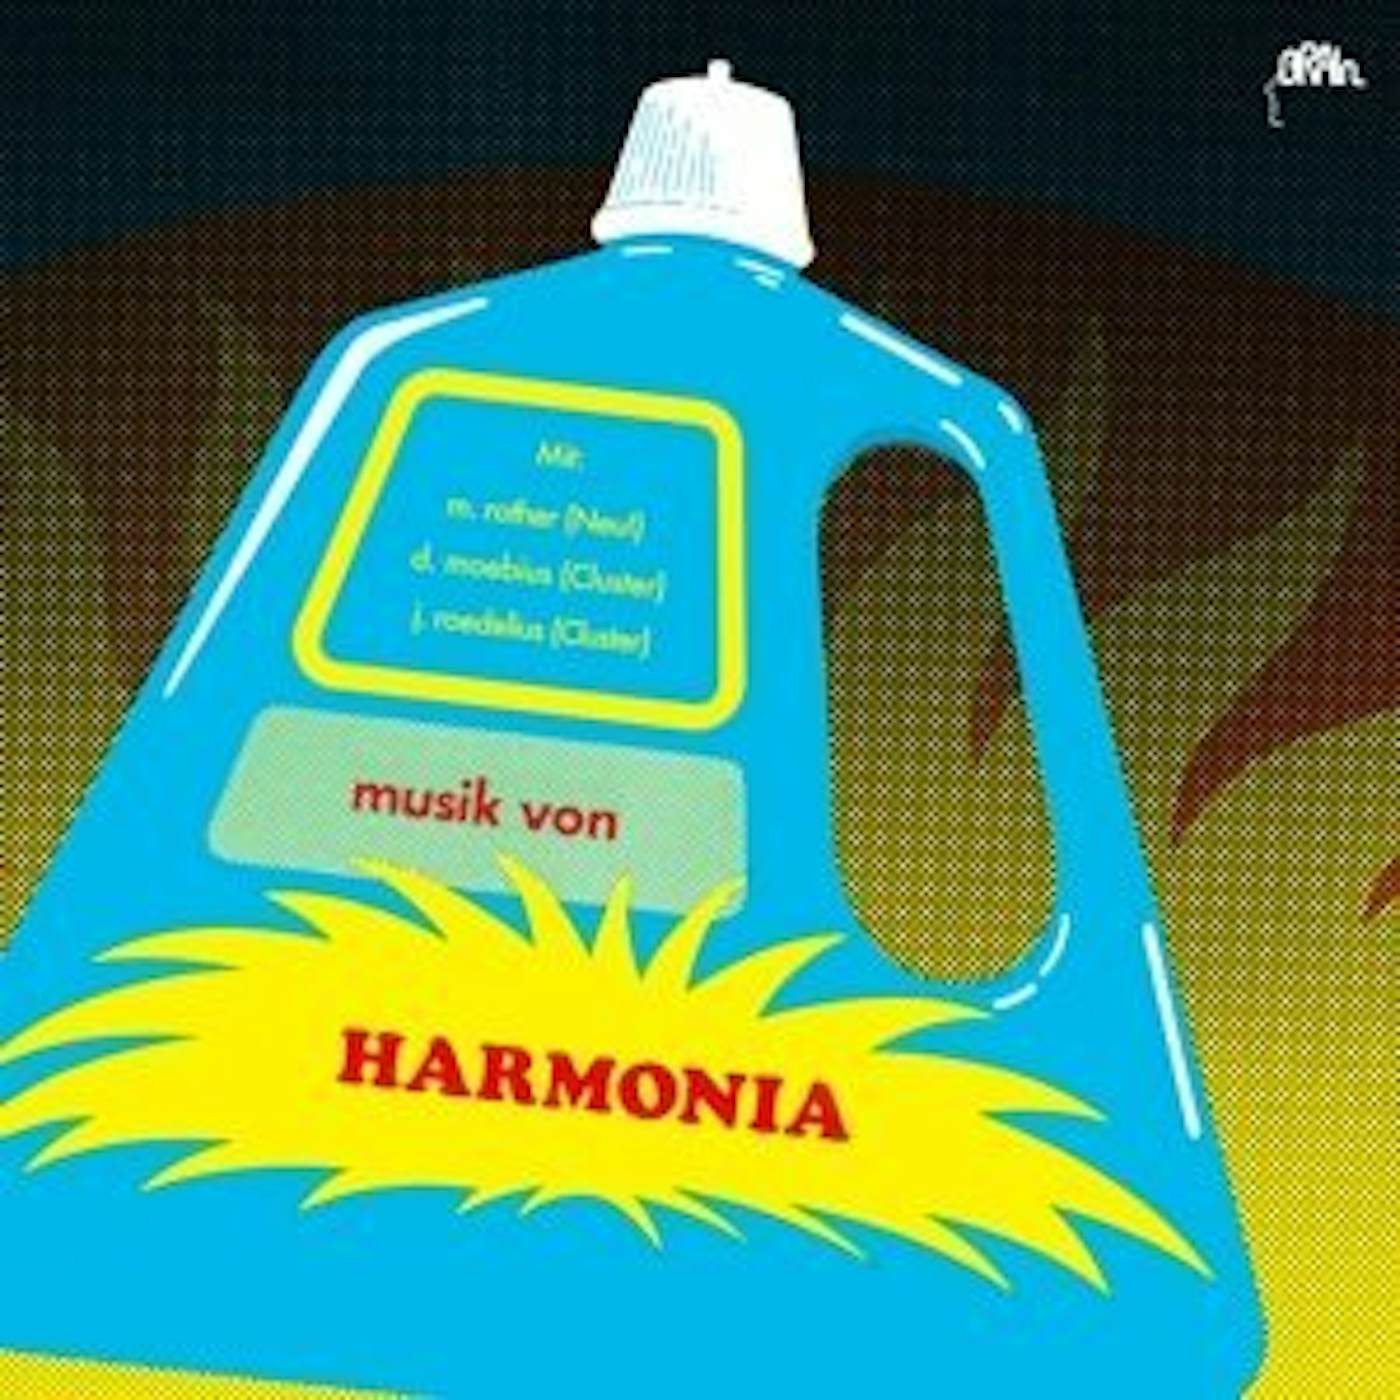 MUSIK VON HARMONIA CD